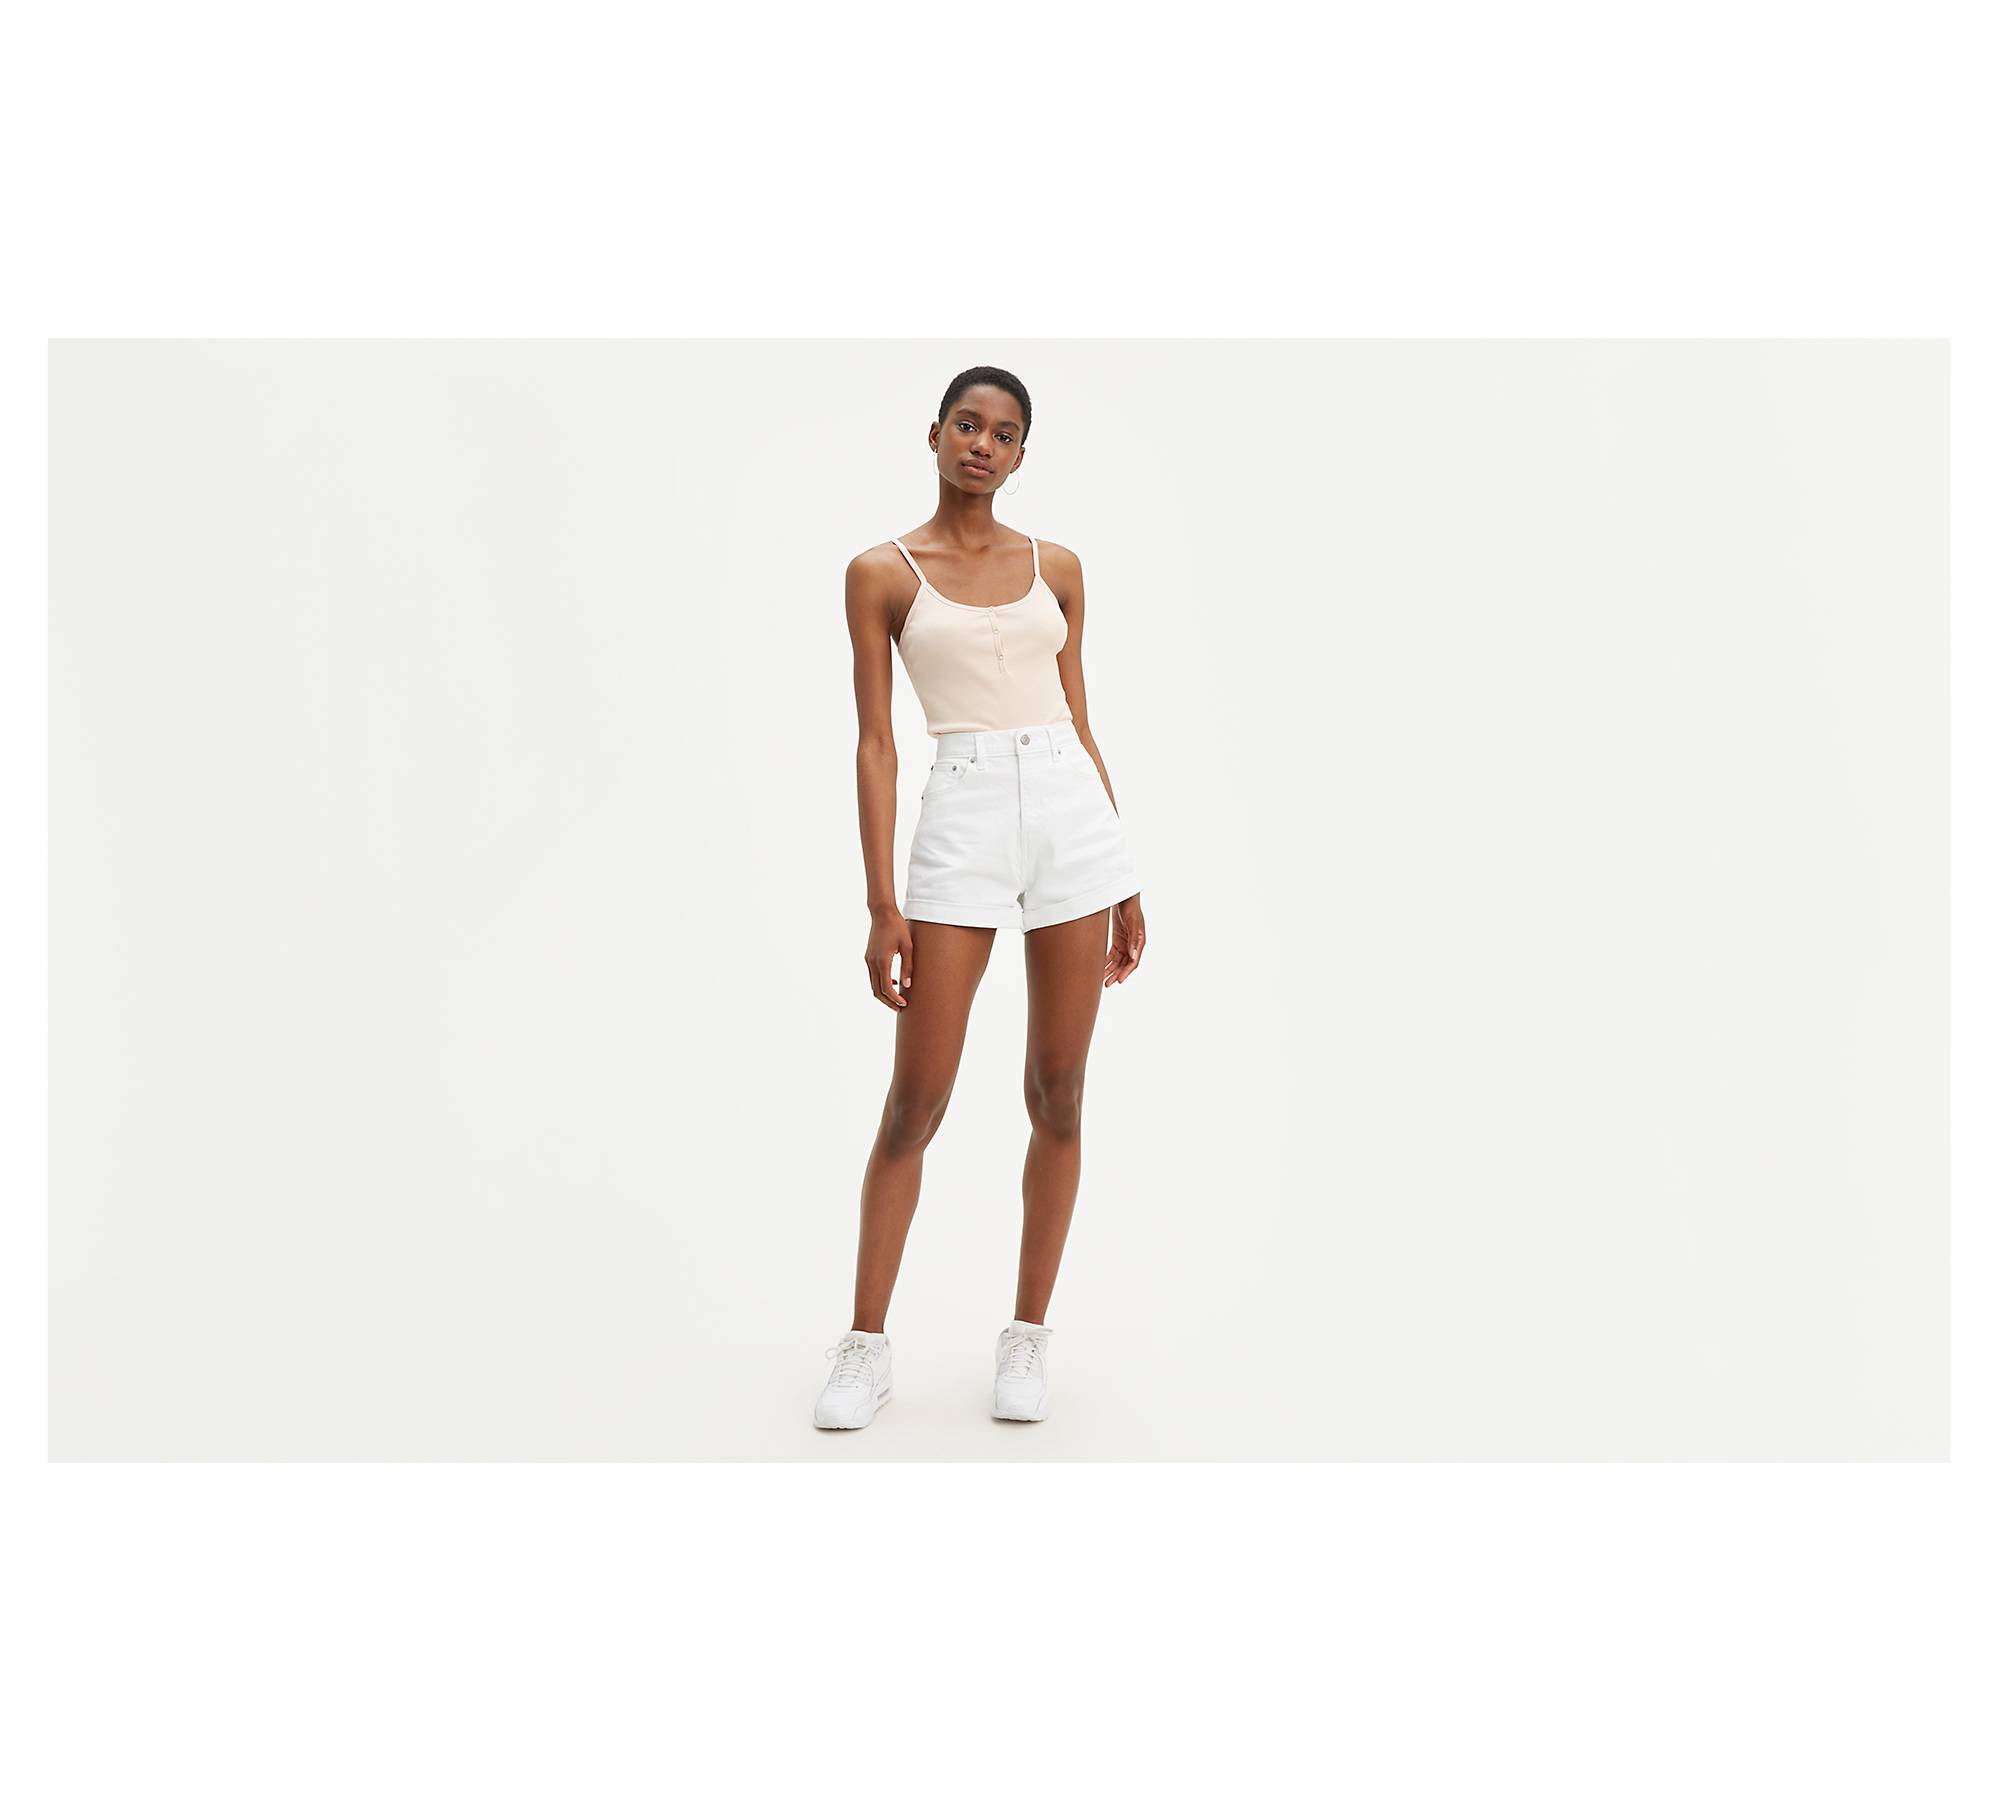 WHITE shorts for women/high waist